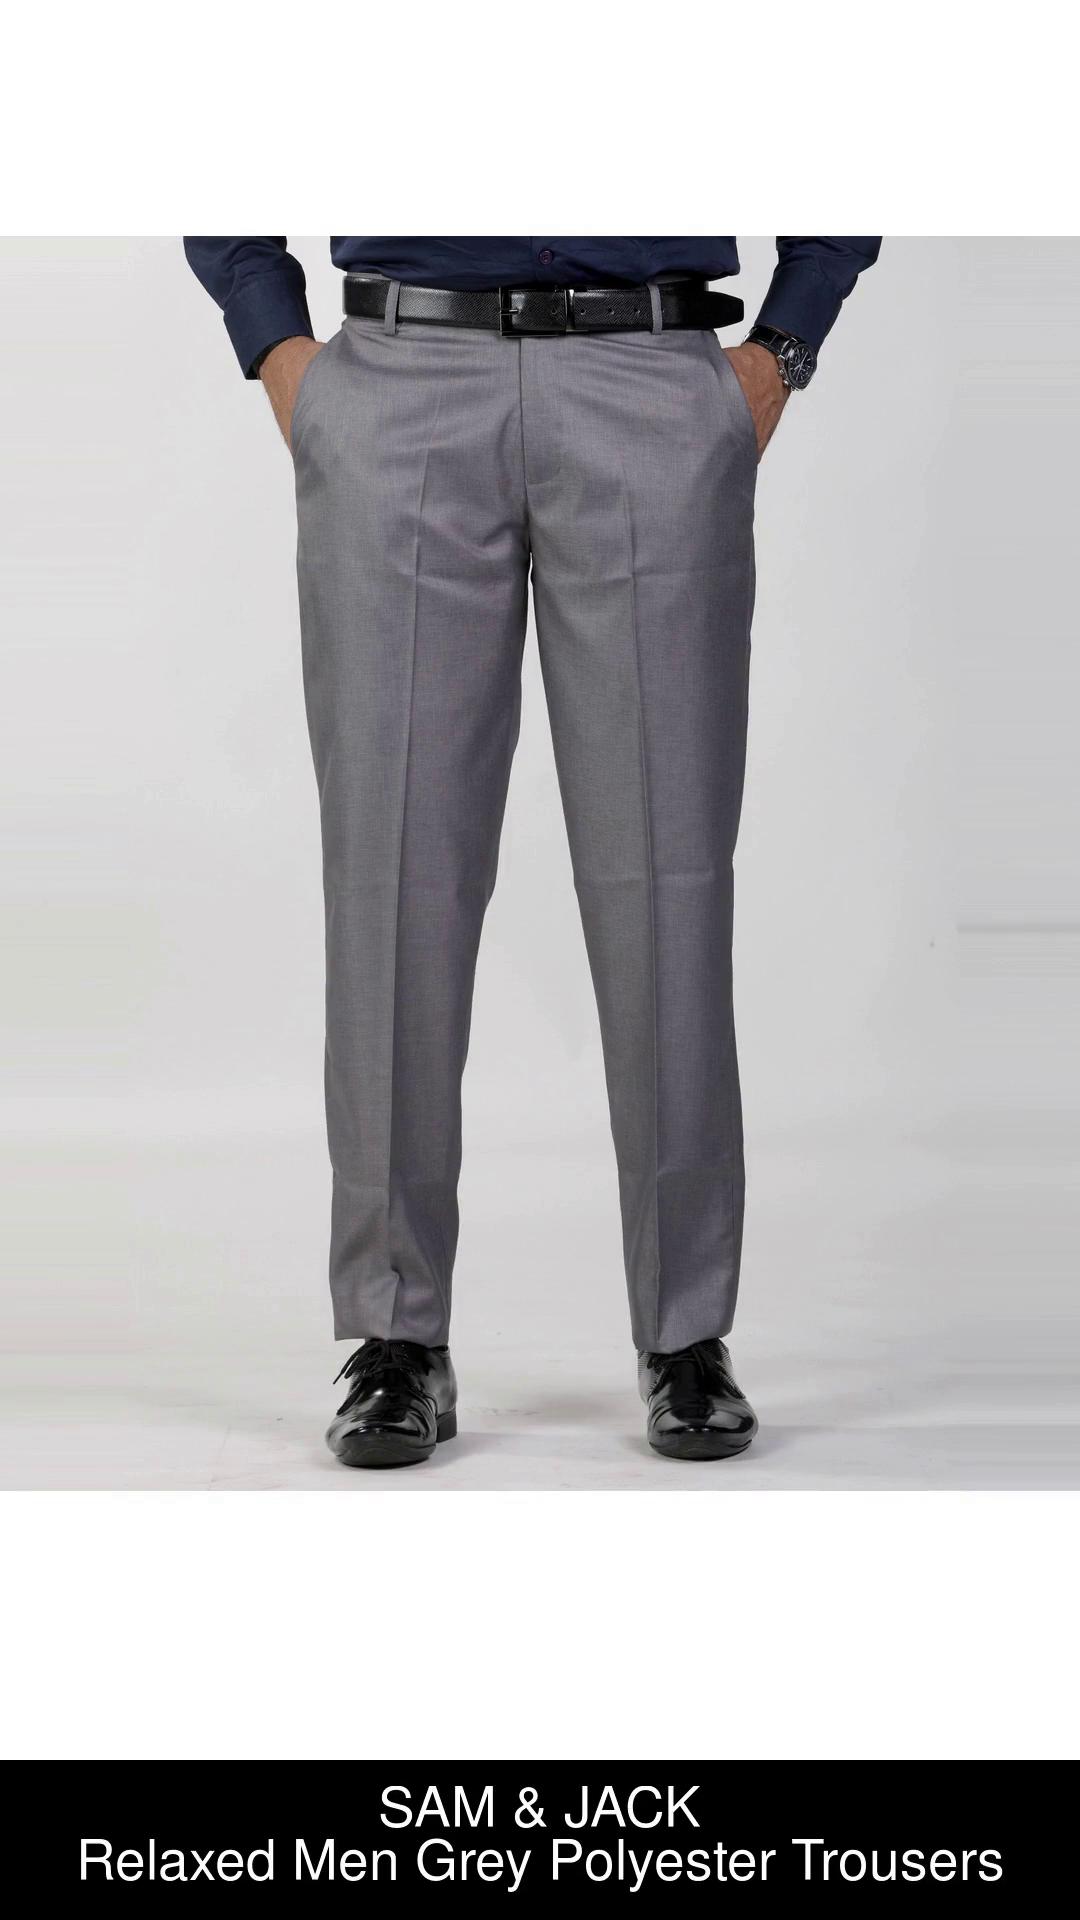 Buy Green Trousers  Pants for Men by Andamen Online  Ajiocom